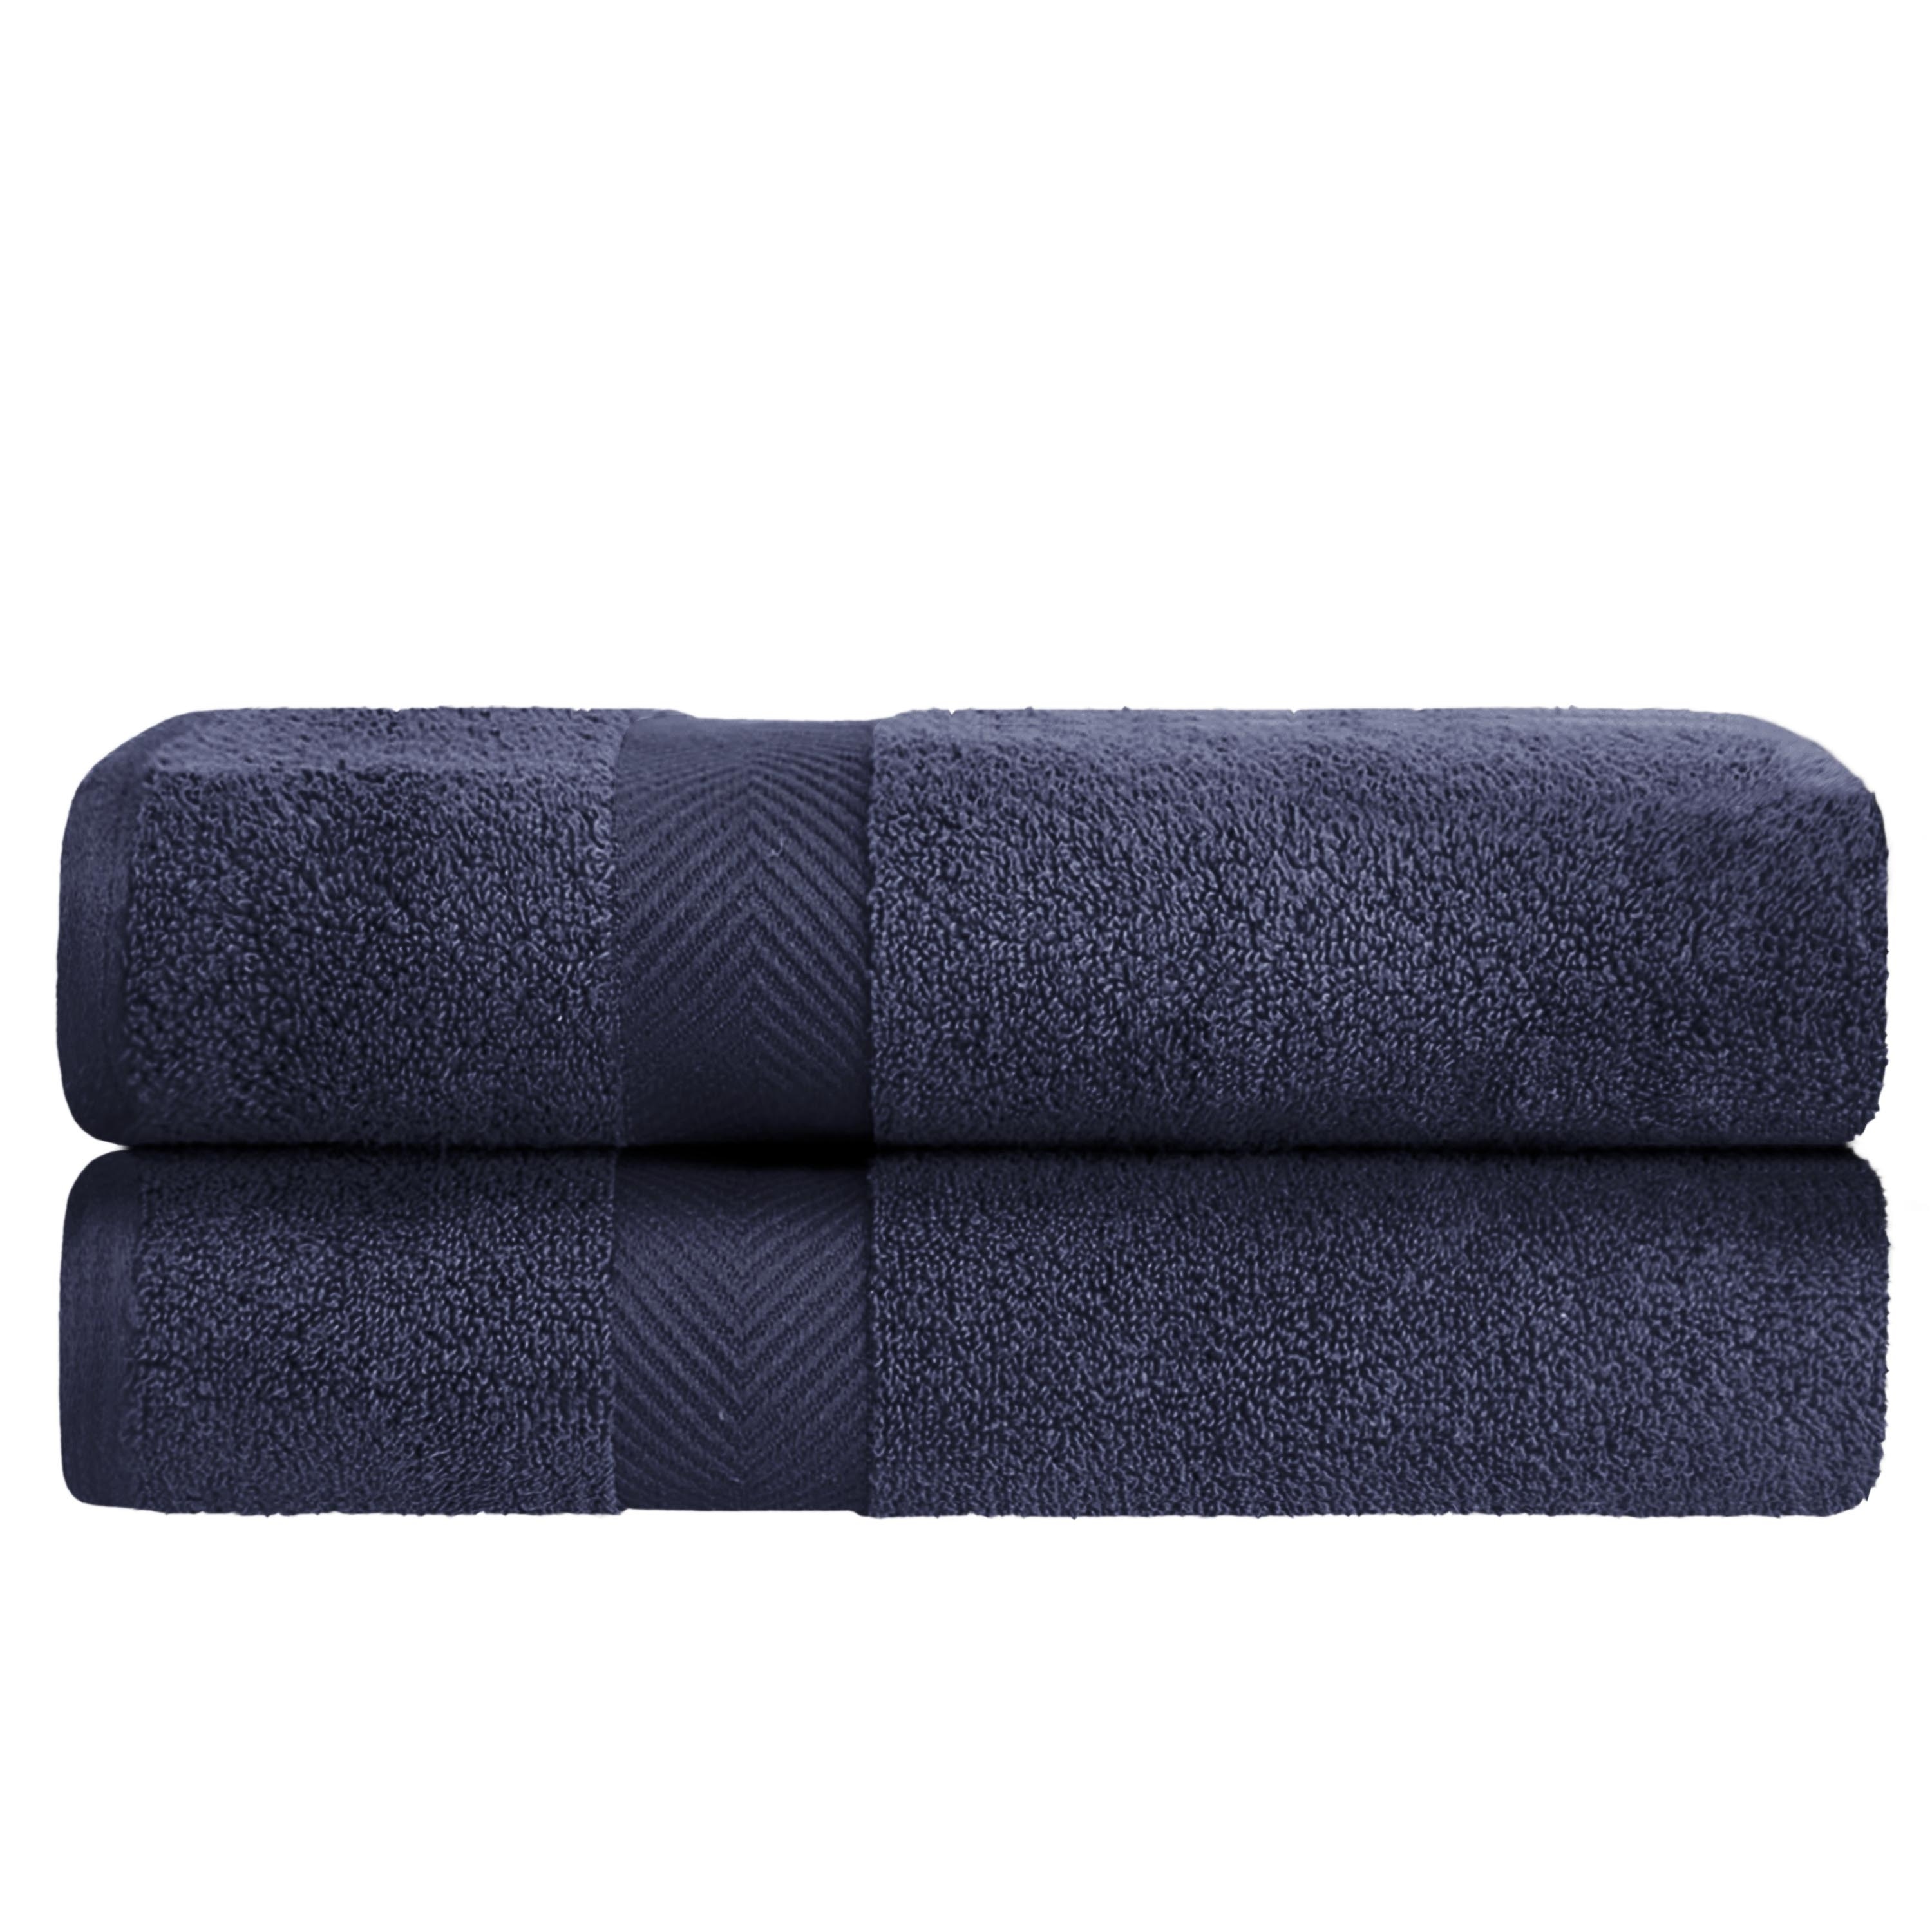 https://ak1.ostkcdn.com/images/products/is/images/direct/f704525e6c16385cb98d5517d79004c3c37ef150/Miranda-Haus-Absorbent-Zero-Twist-Cotton-Bath-Towel-%28Set-of-2%29.jpg